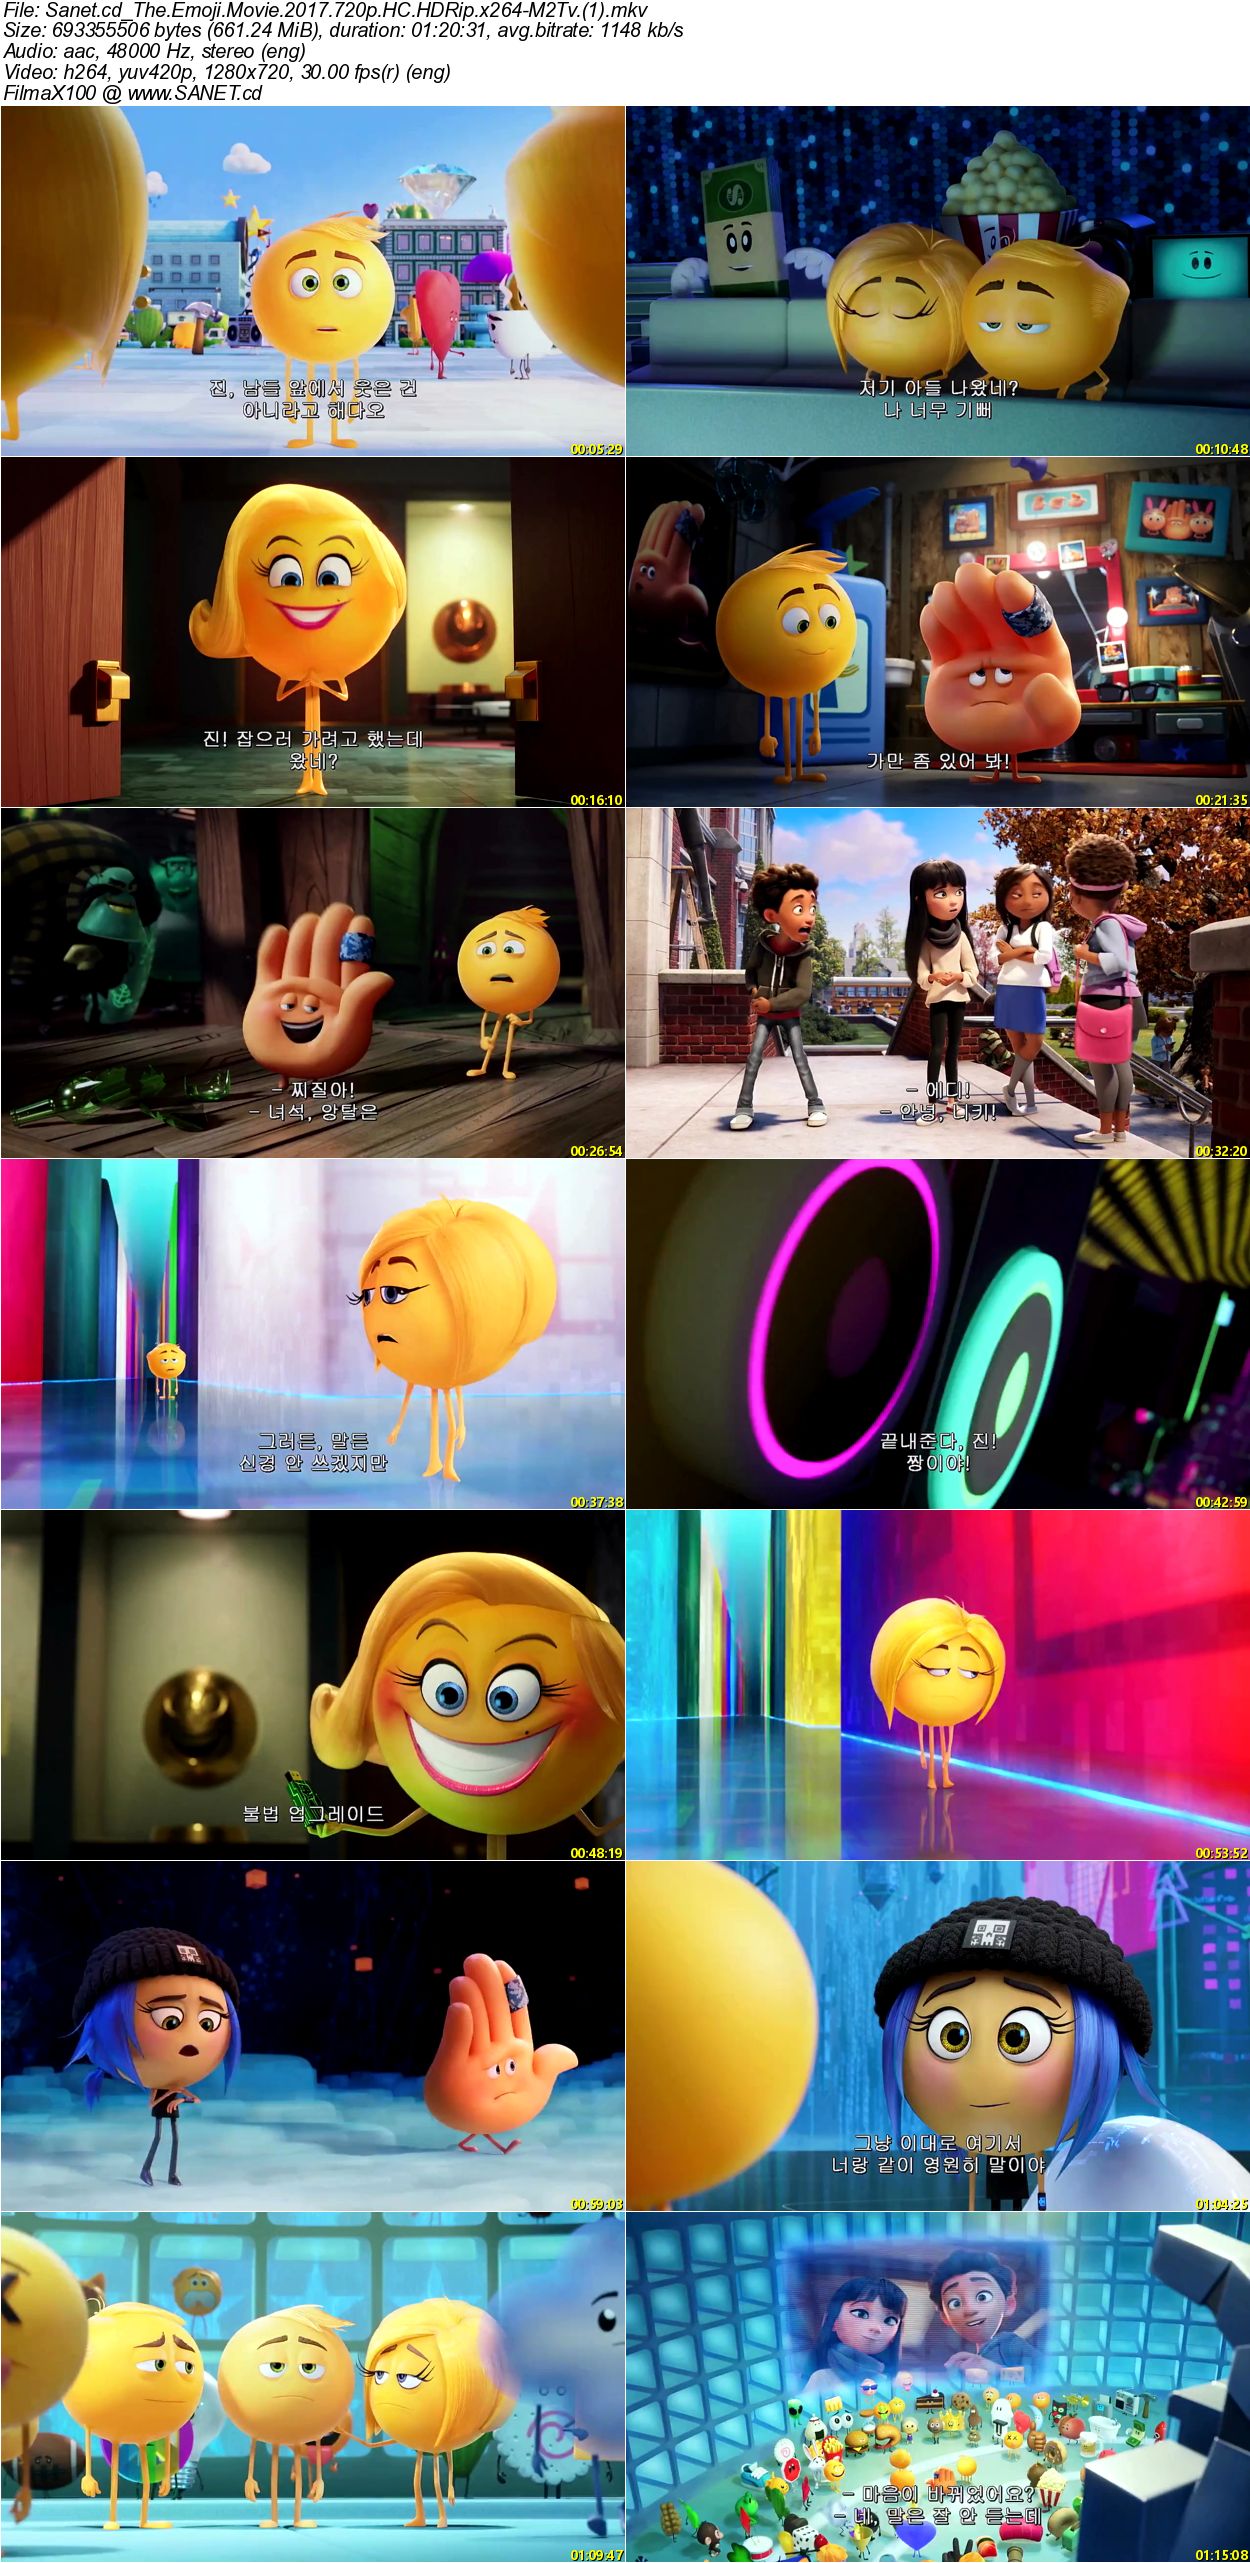 emoji movie production company